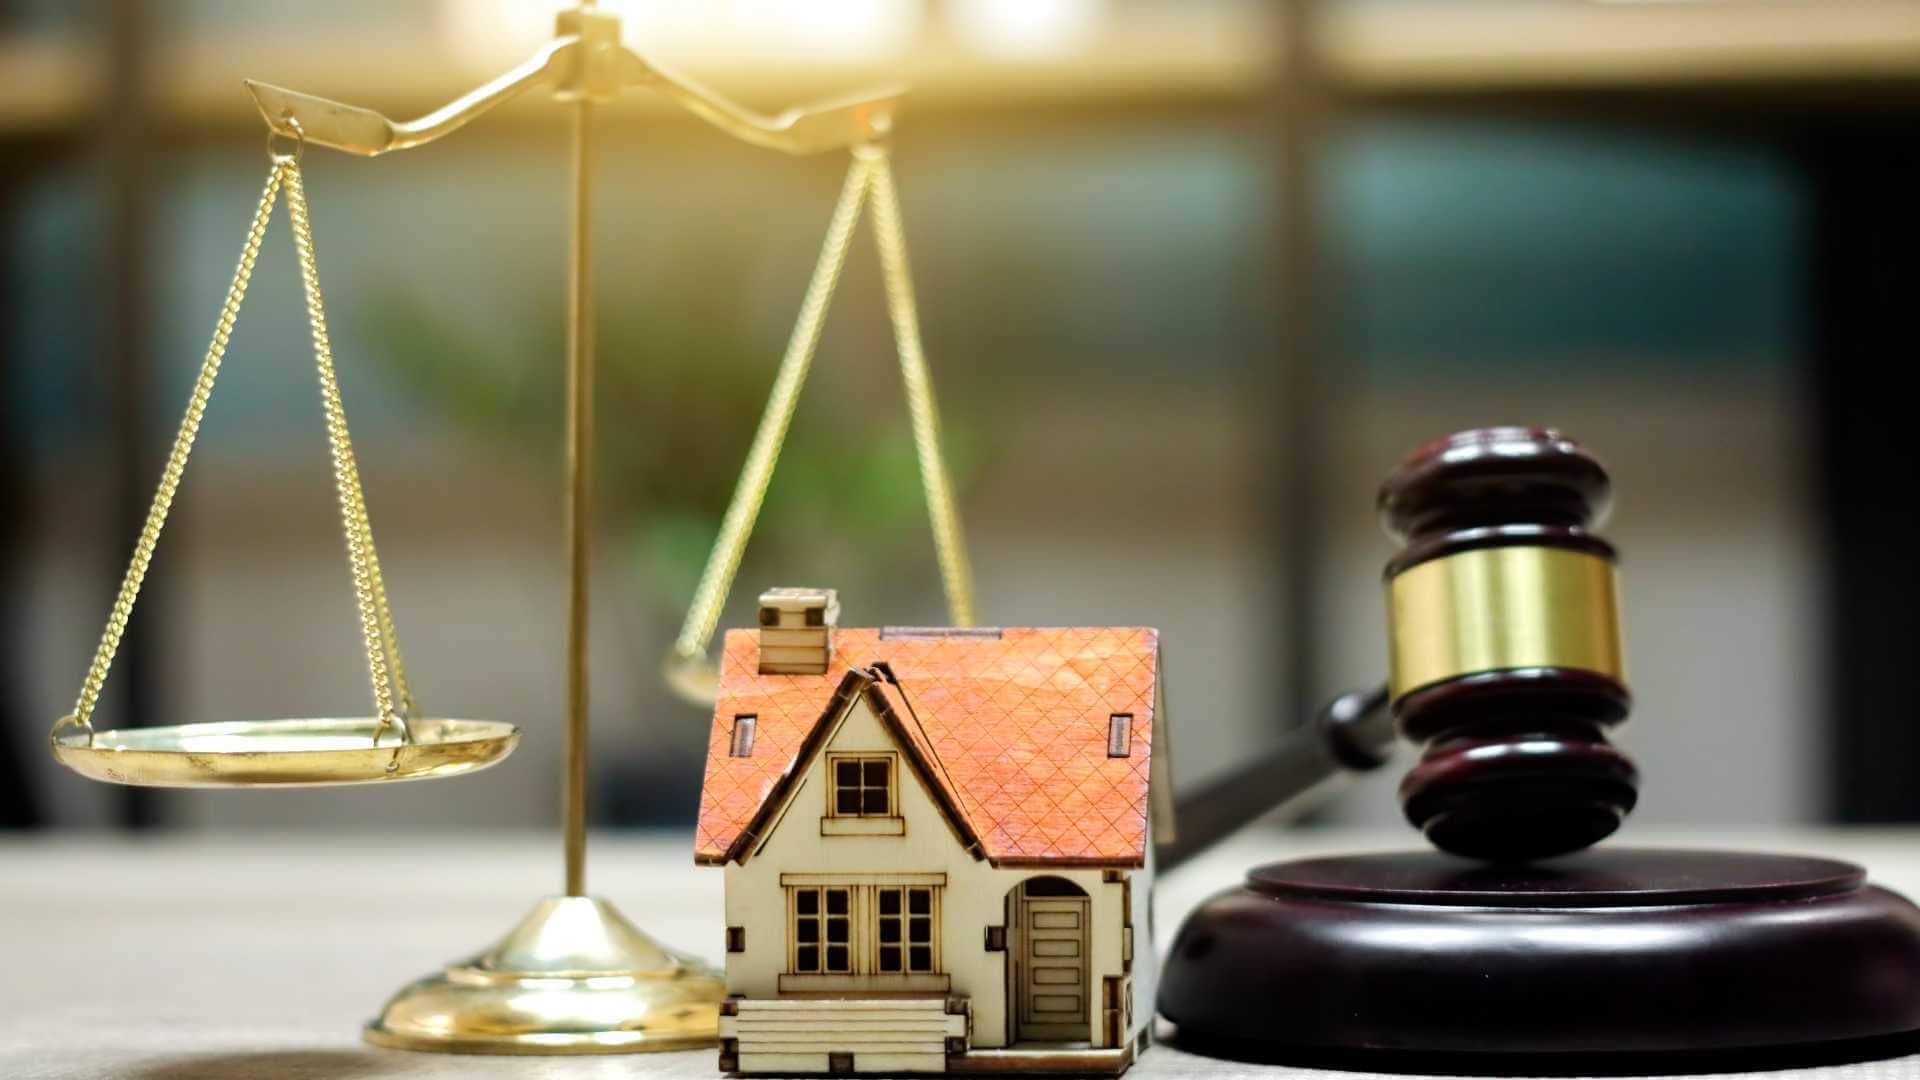 A legal balance, house figurine and judges gavel